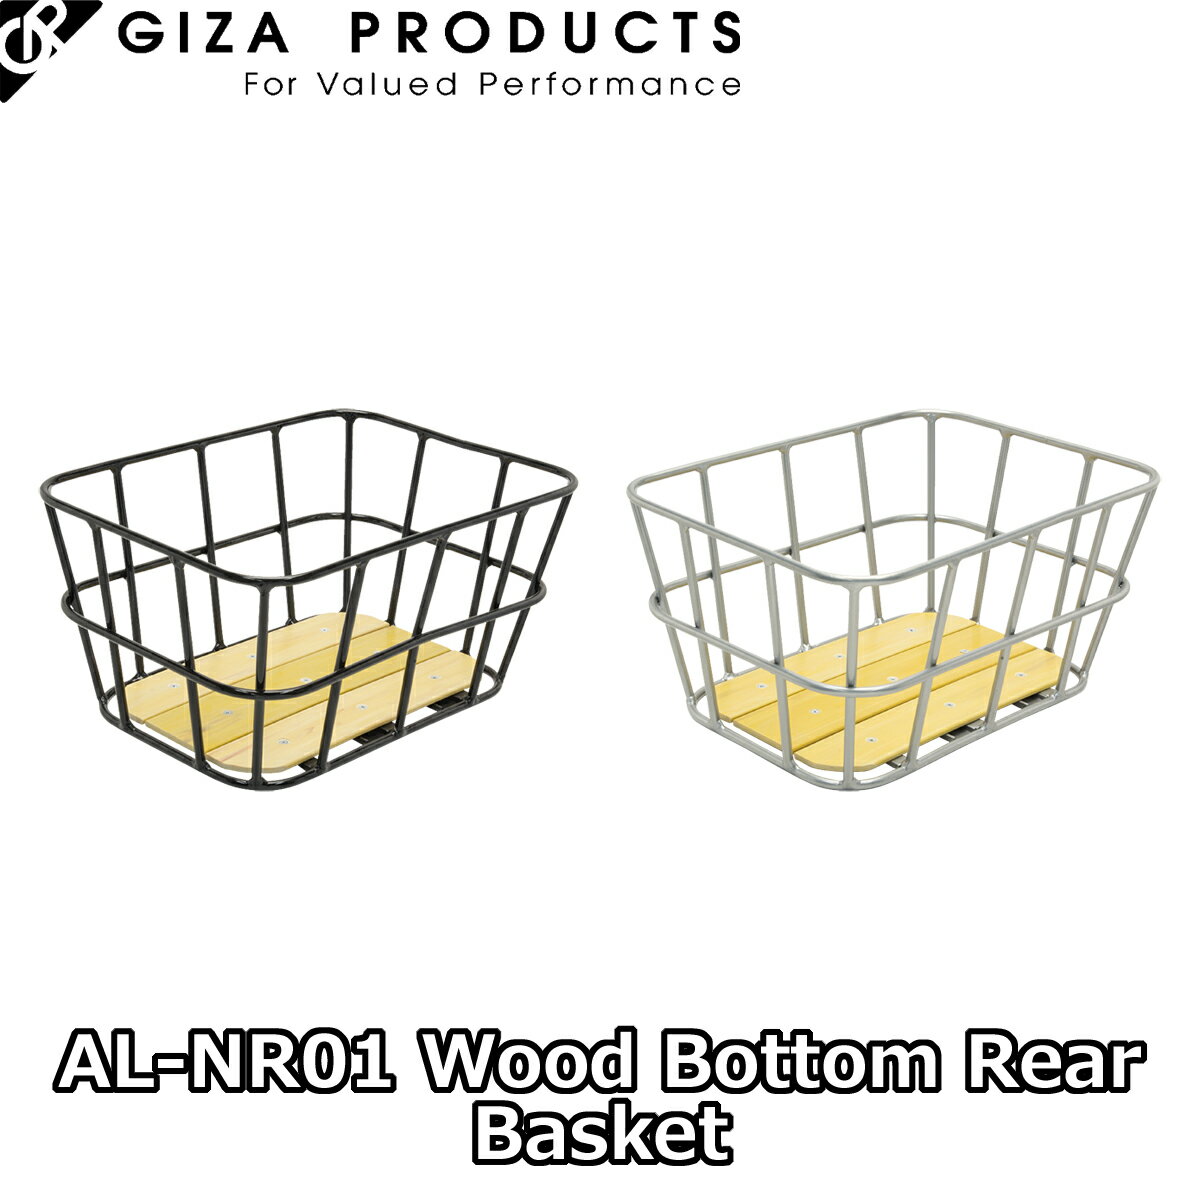 y5/20́u8{IvGg[Ń|CgUPzGIZA PRODUCTS AL-NR01 Wood Bottom Rear Basket MUv_Nc AL-NR01 Ebh {g A oXPbg